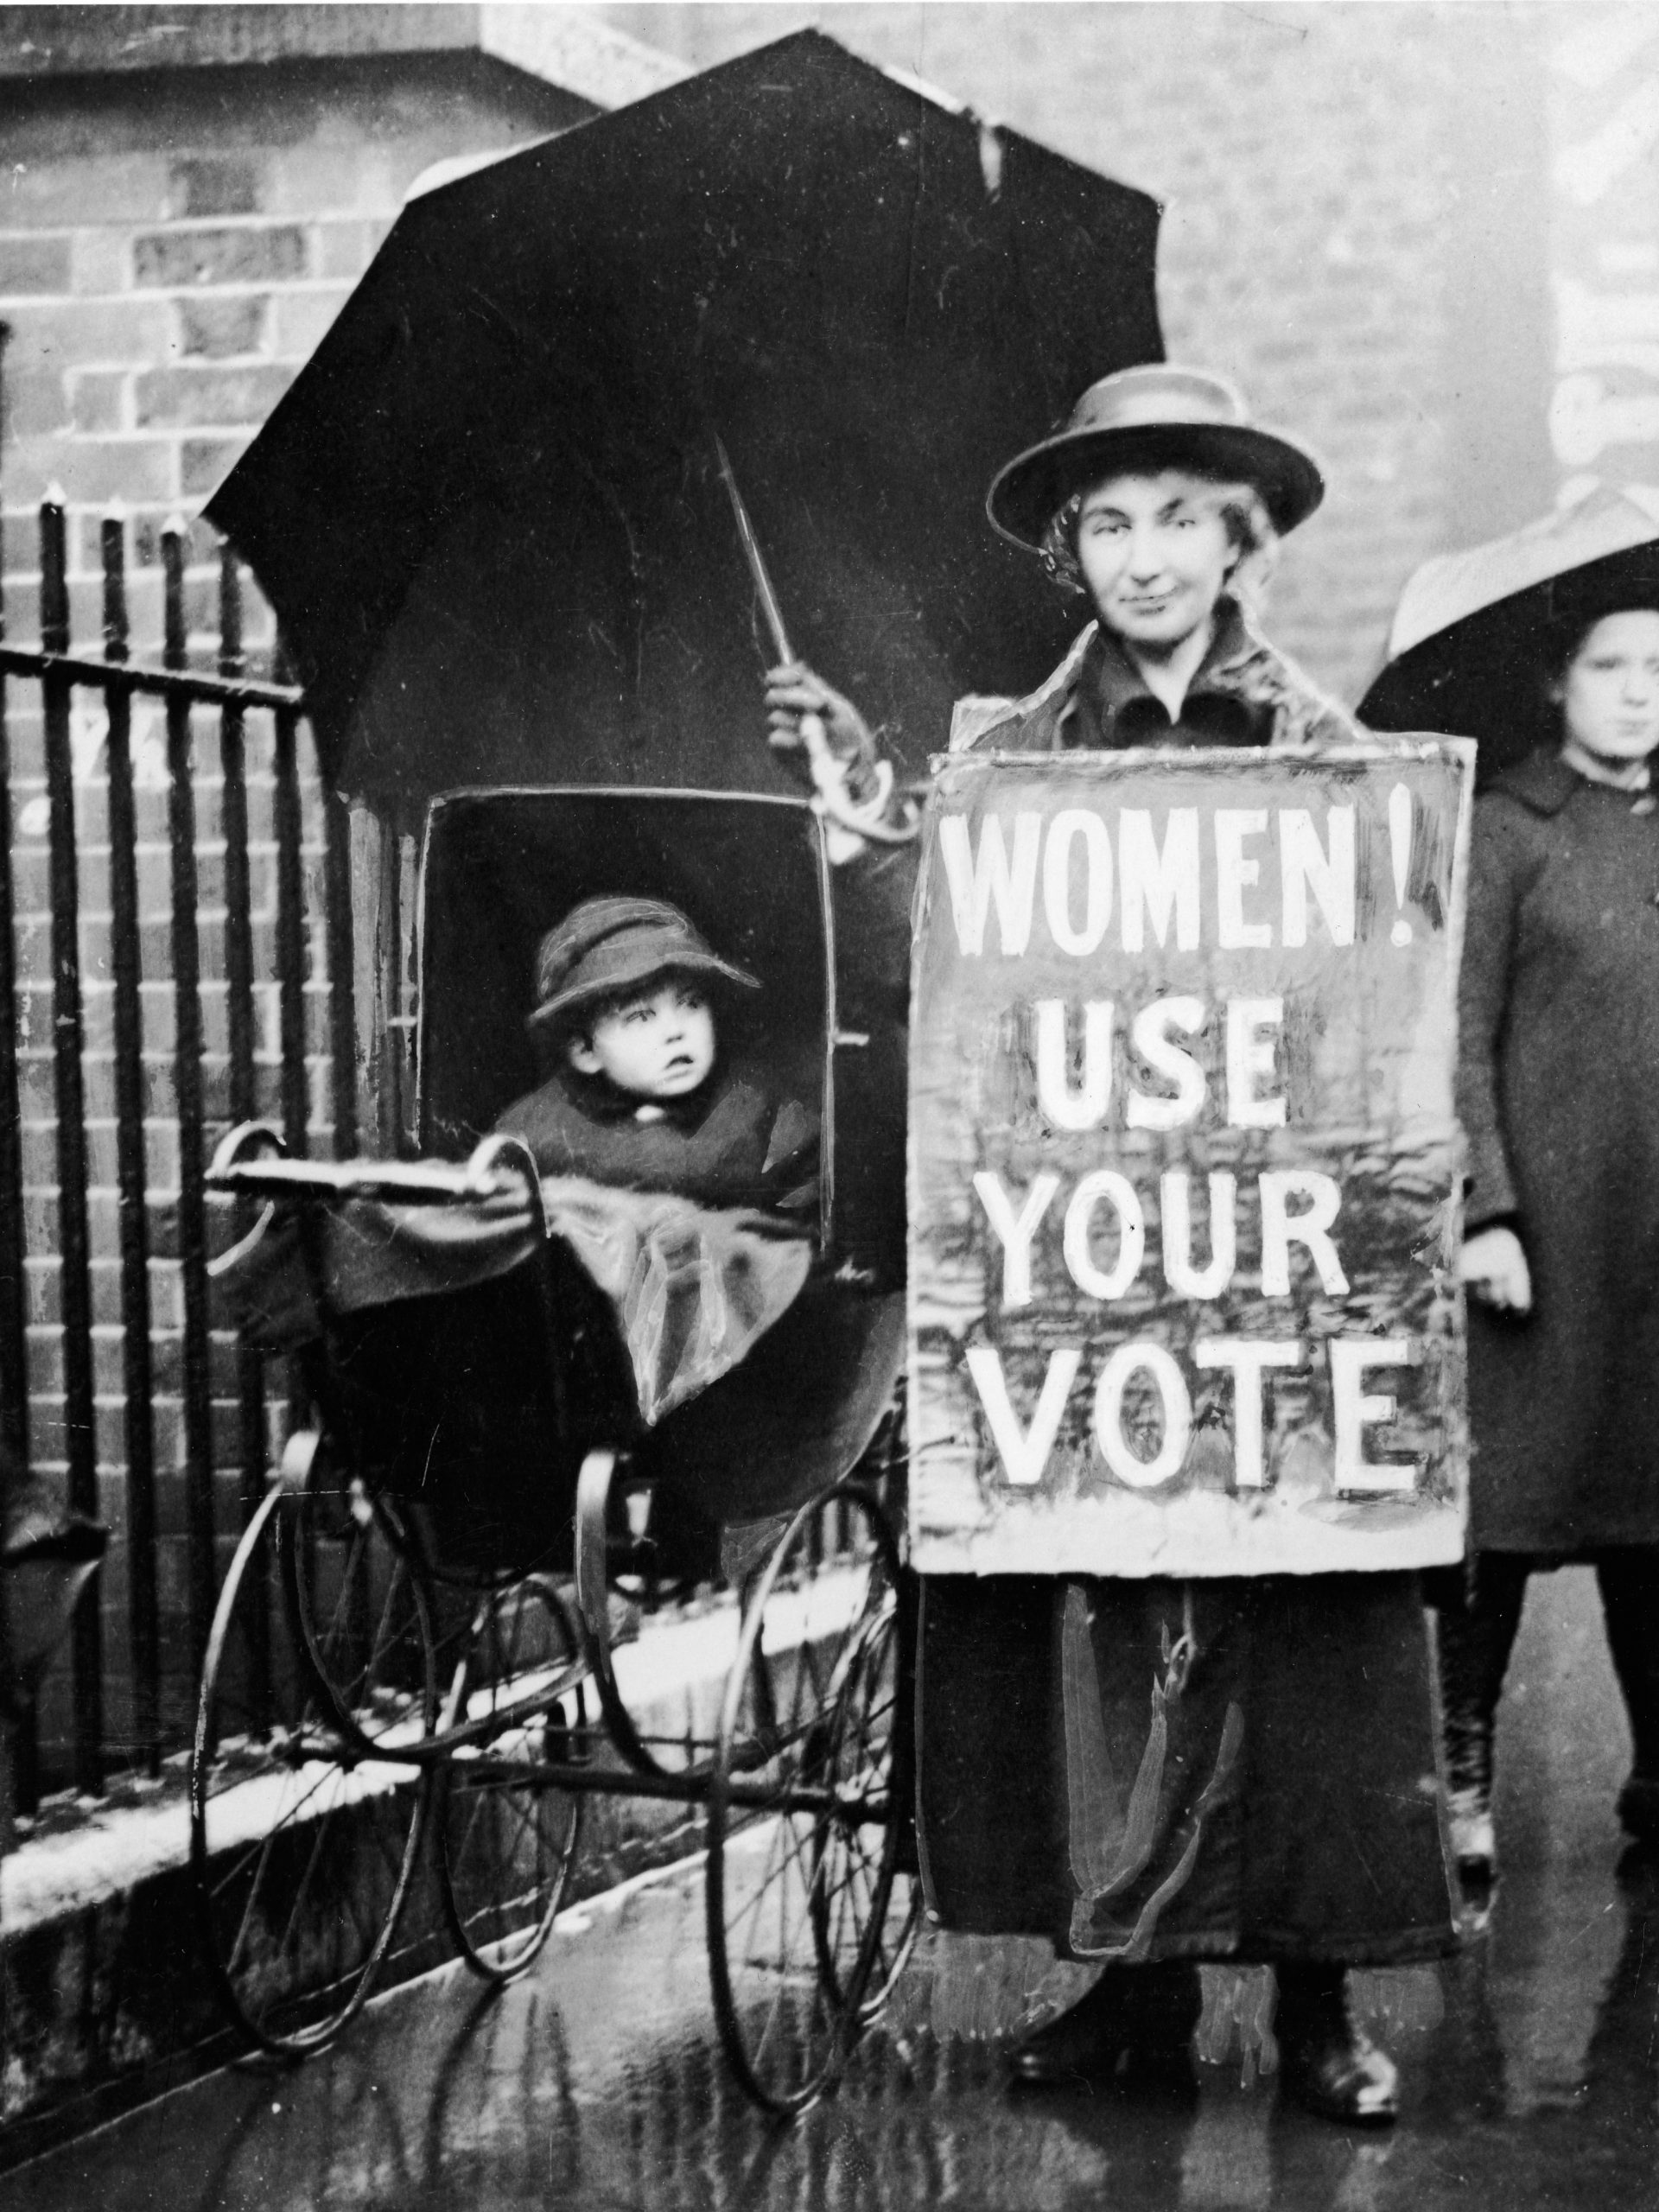 women use your vote suffragette